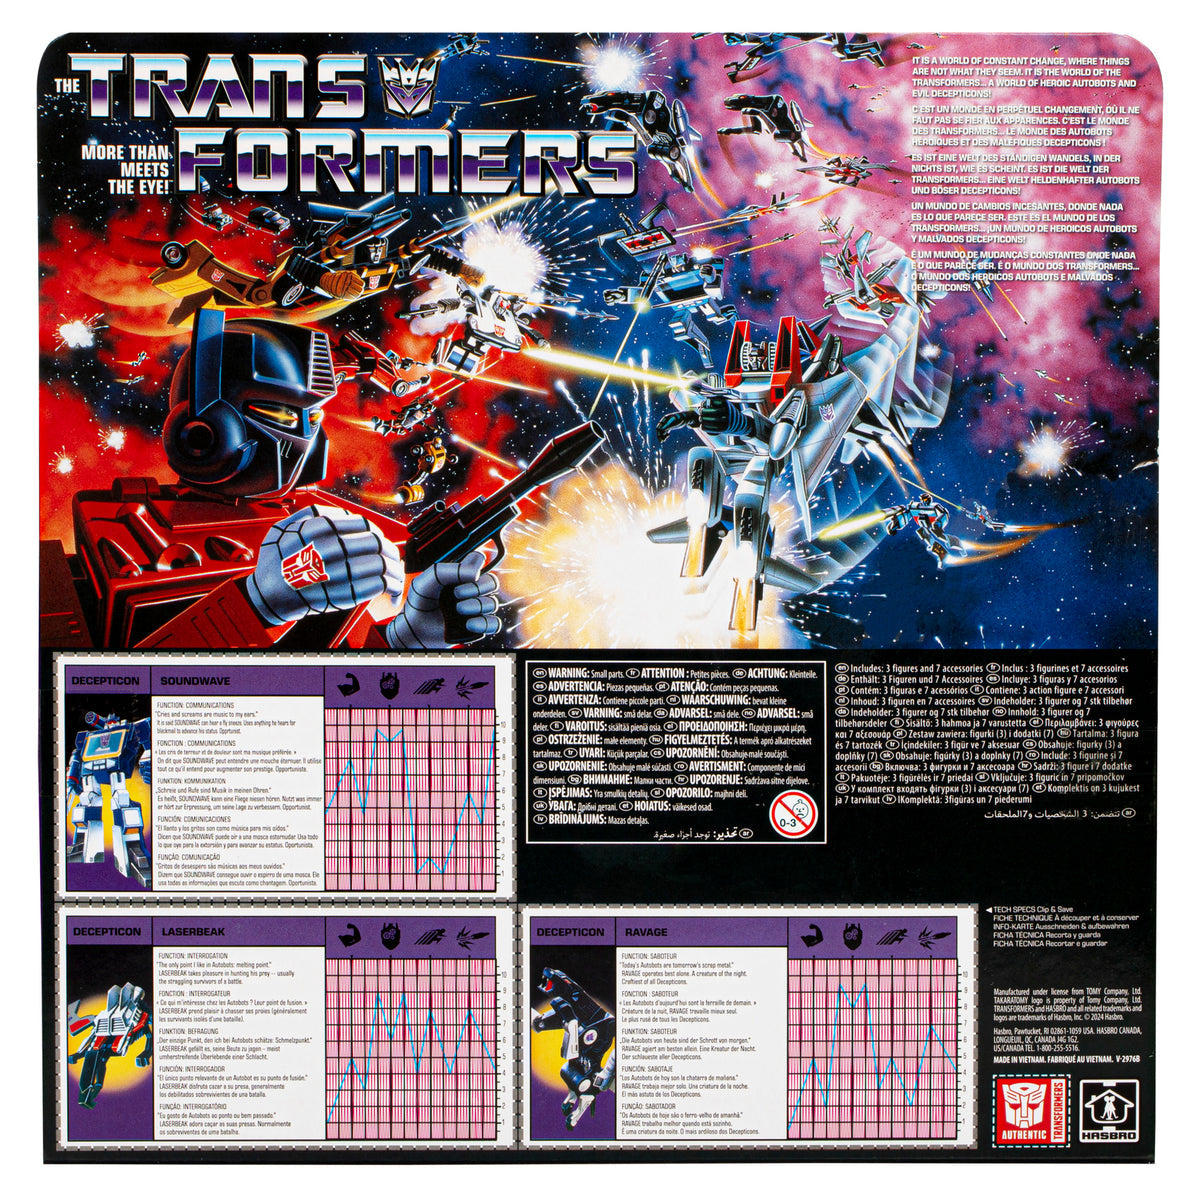 Hasbro - Transformers Retro Collection (40th Anniversary) - Soundwave, Laserbeak & Ravage - Marvelous Toys